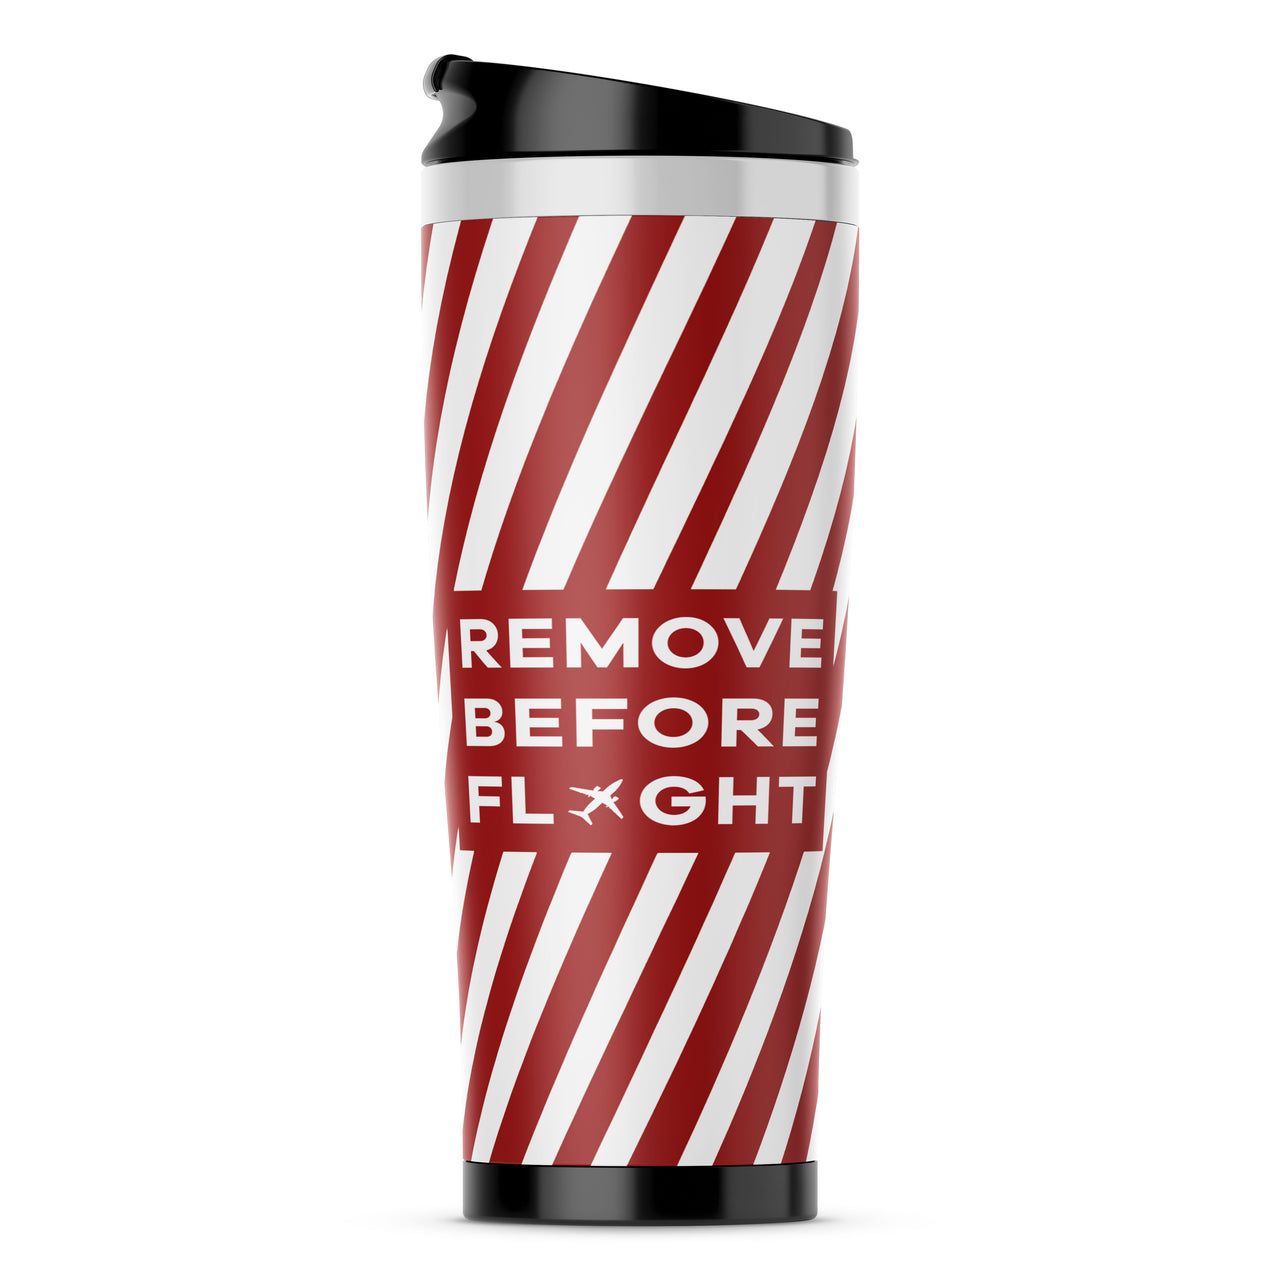 Special Edition Remove Before Flight Designed Travel Mugs